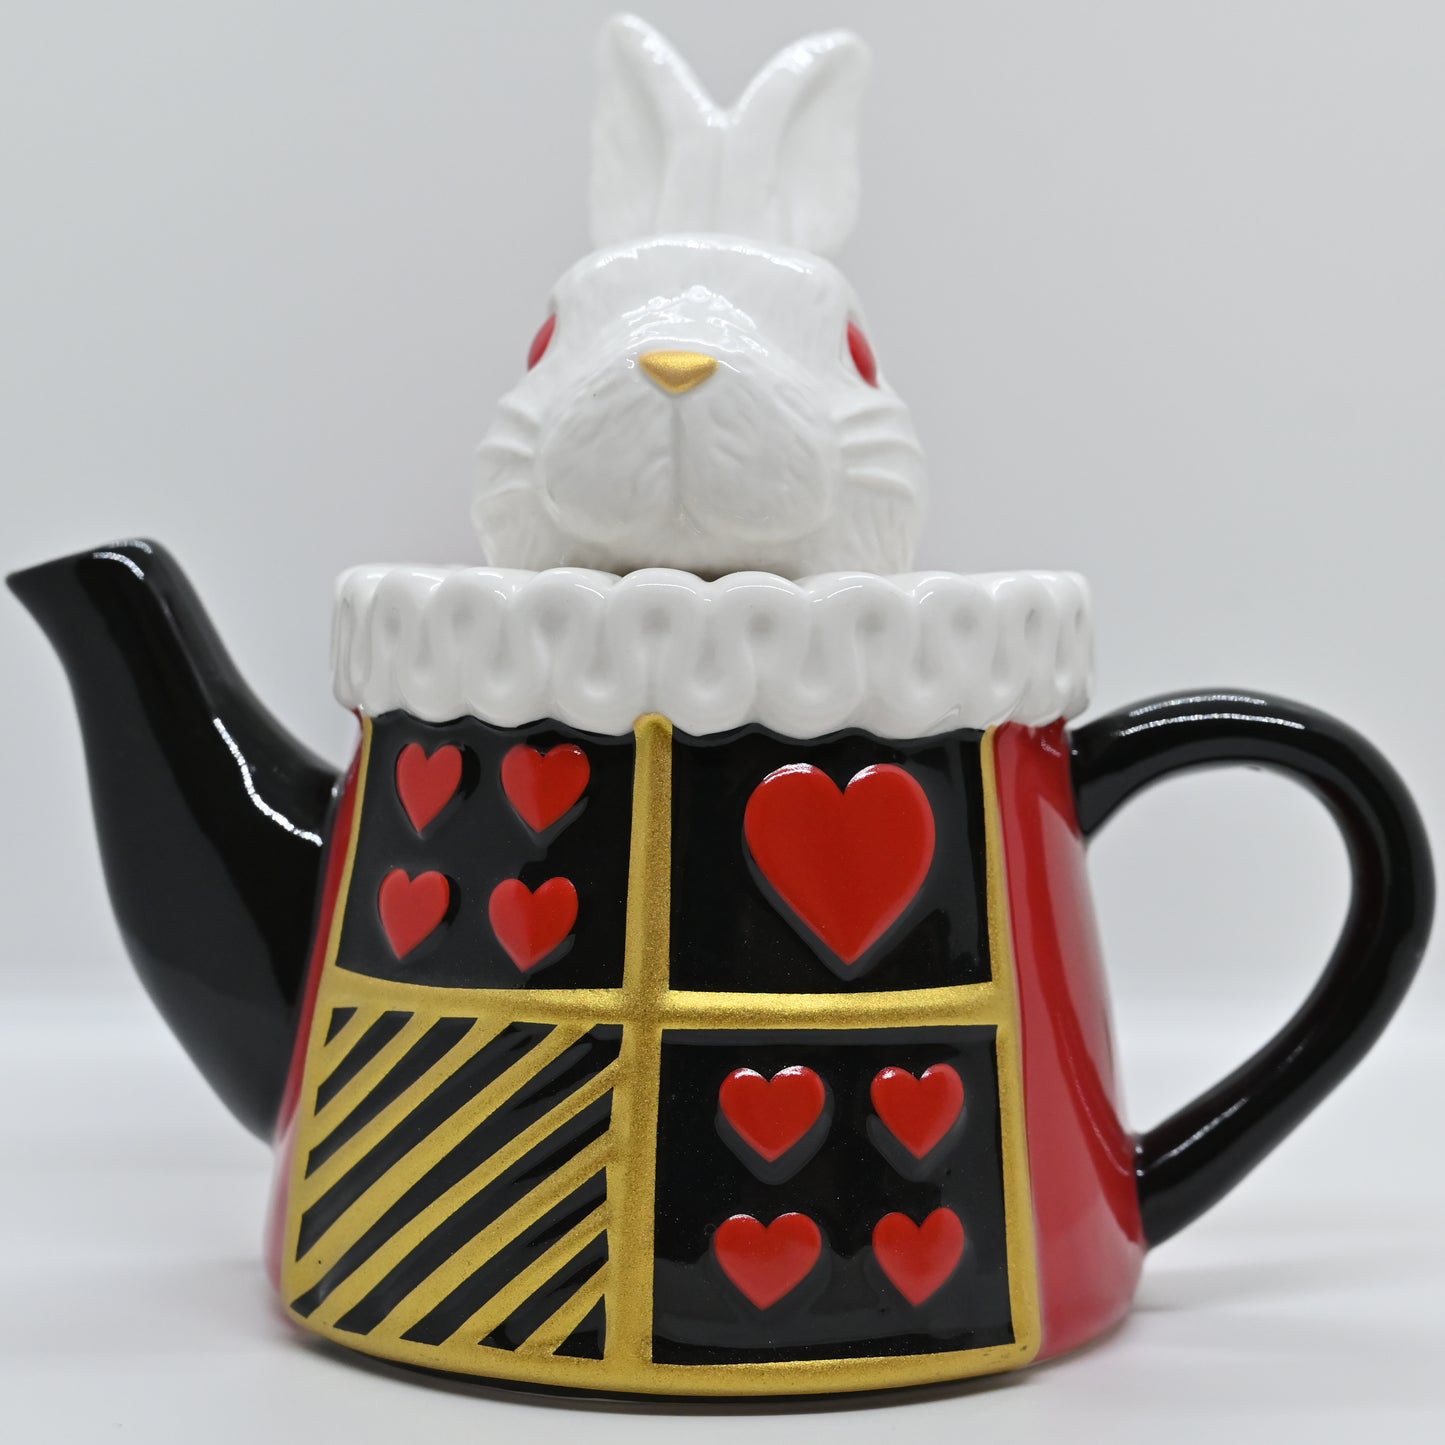 White Rabbit Queen of Hearts Shaped Tea Set